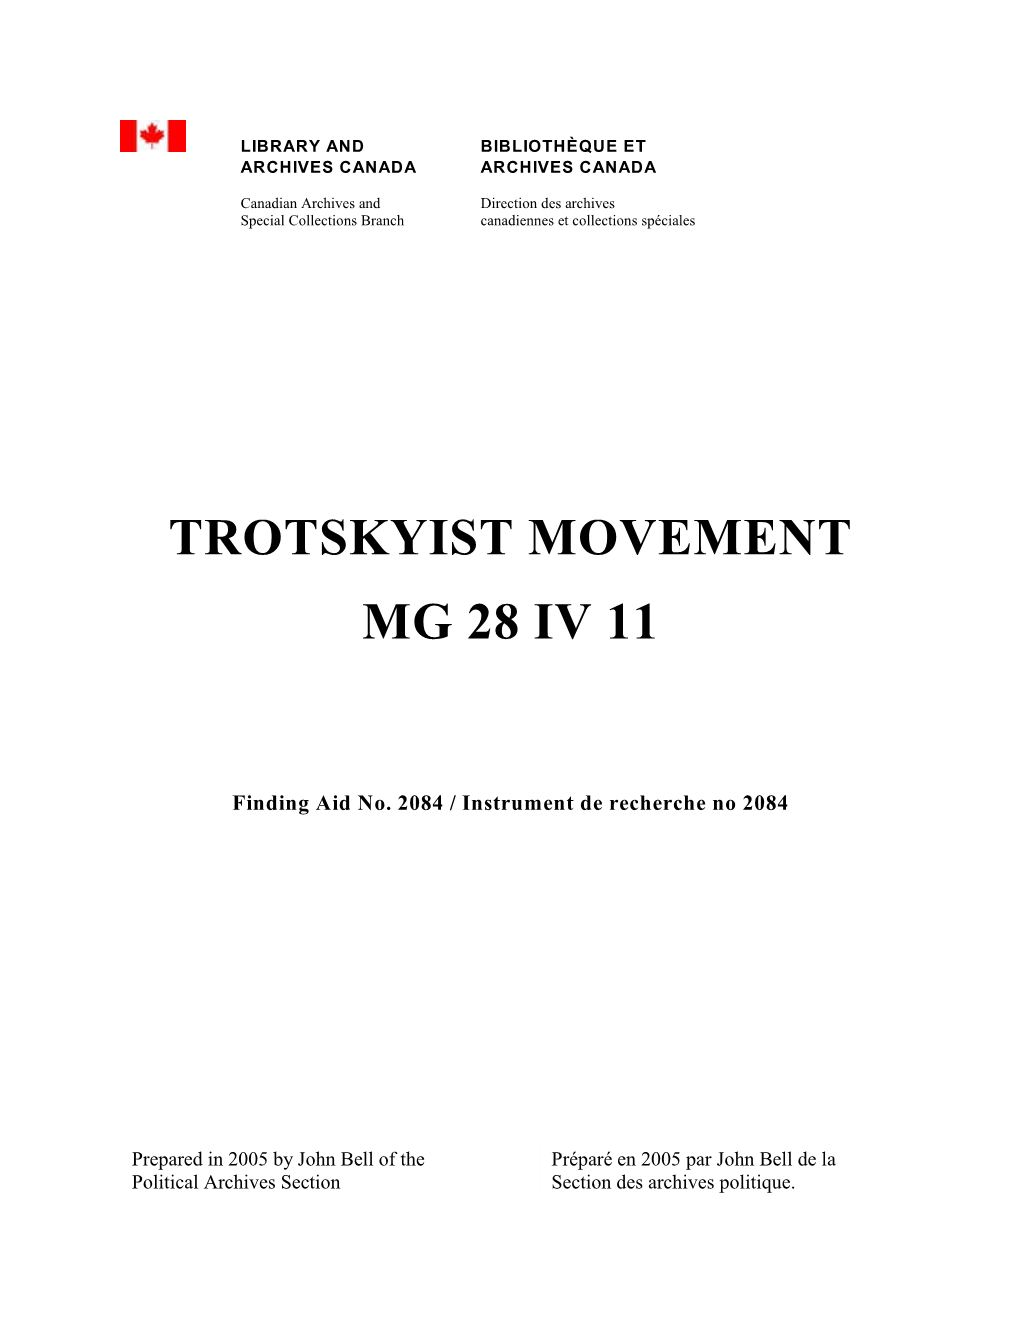 Trotskyist Movement Mg 28 Iv 11